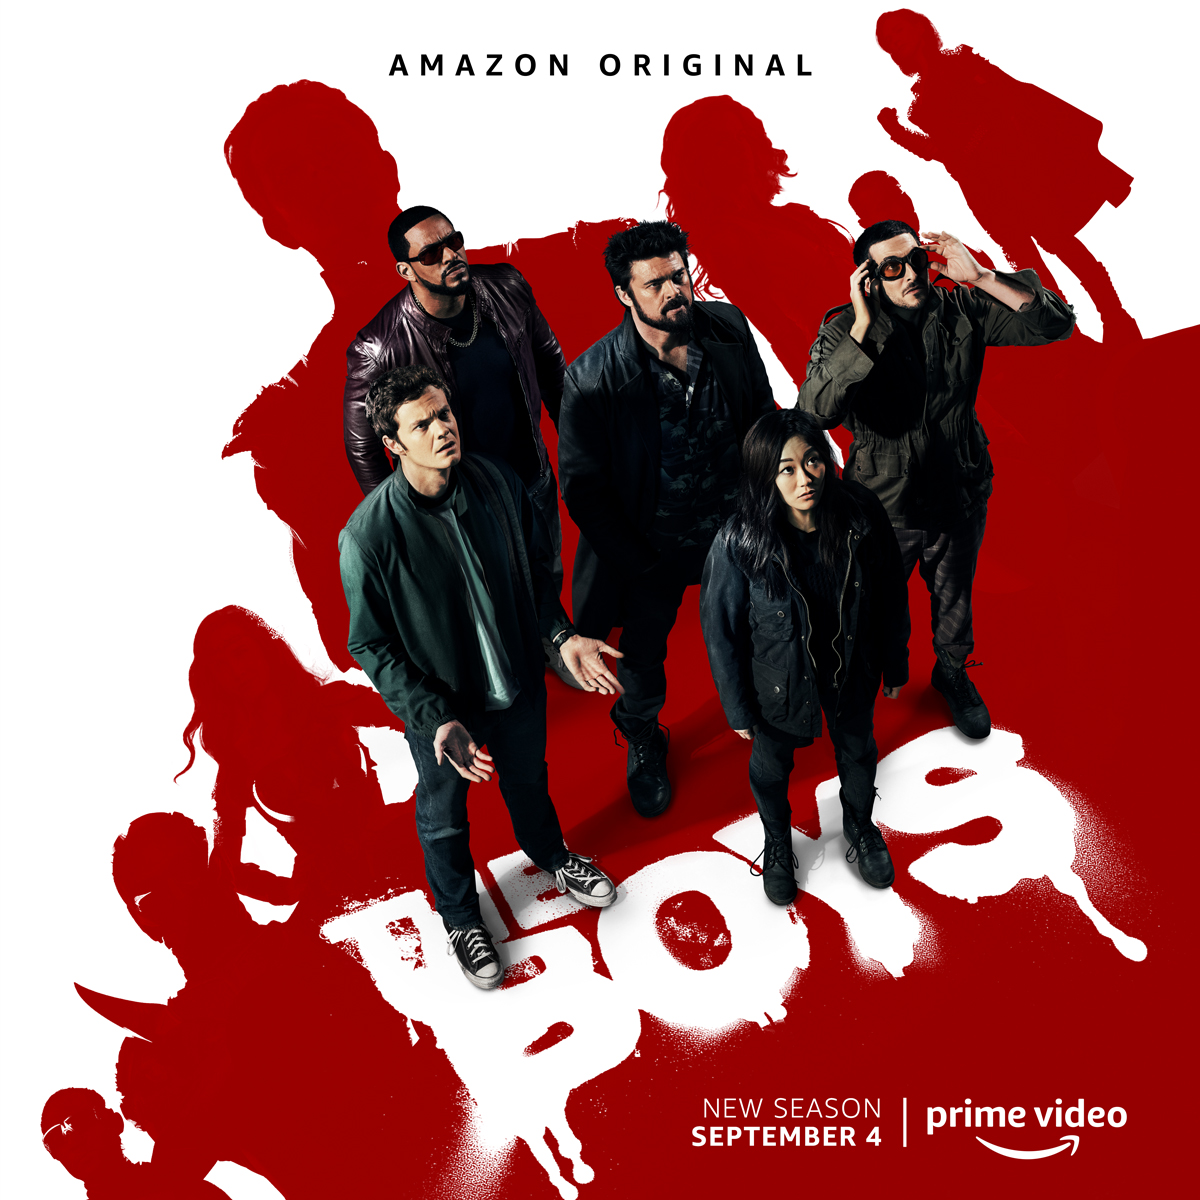 [News] THE BOYS Returns September 4 to Amazon Prime Video